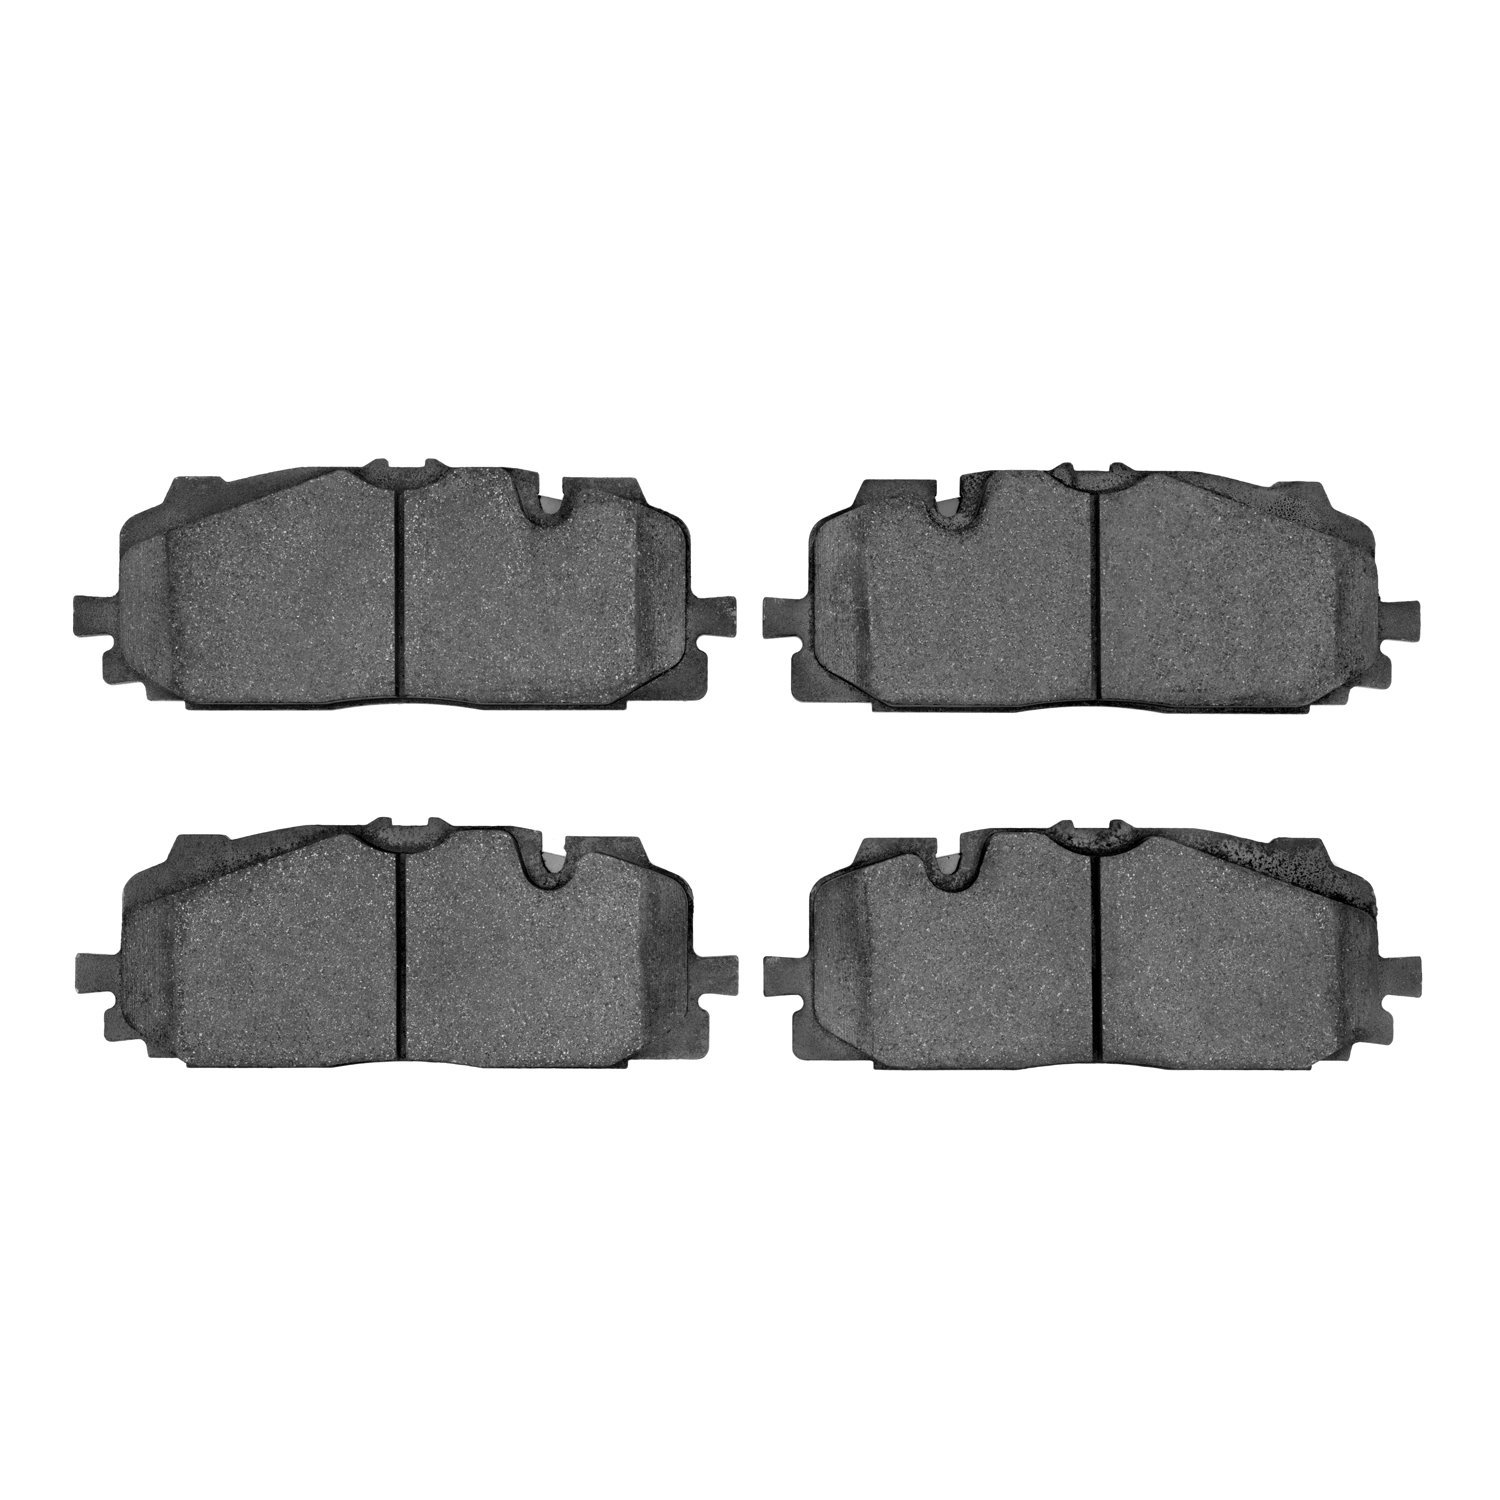 5000 Advanced Ceramic Brake Pads, Fits Select Audi/Volkswagen